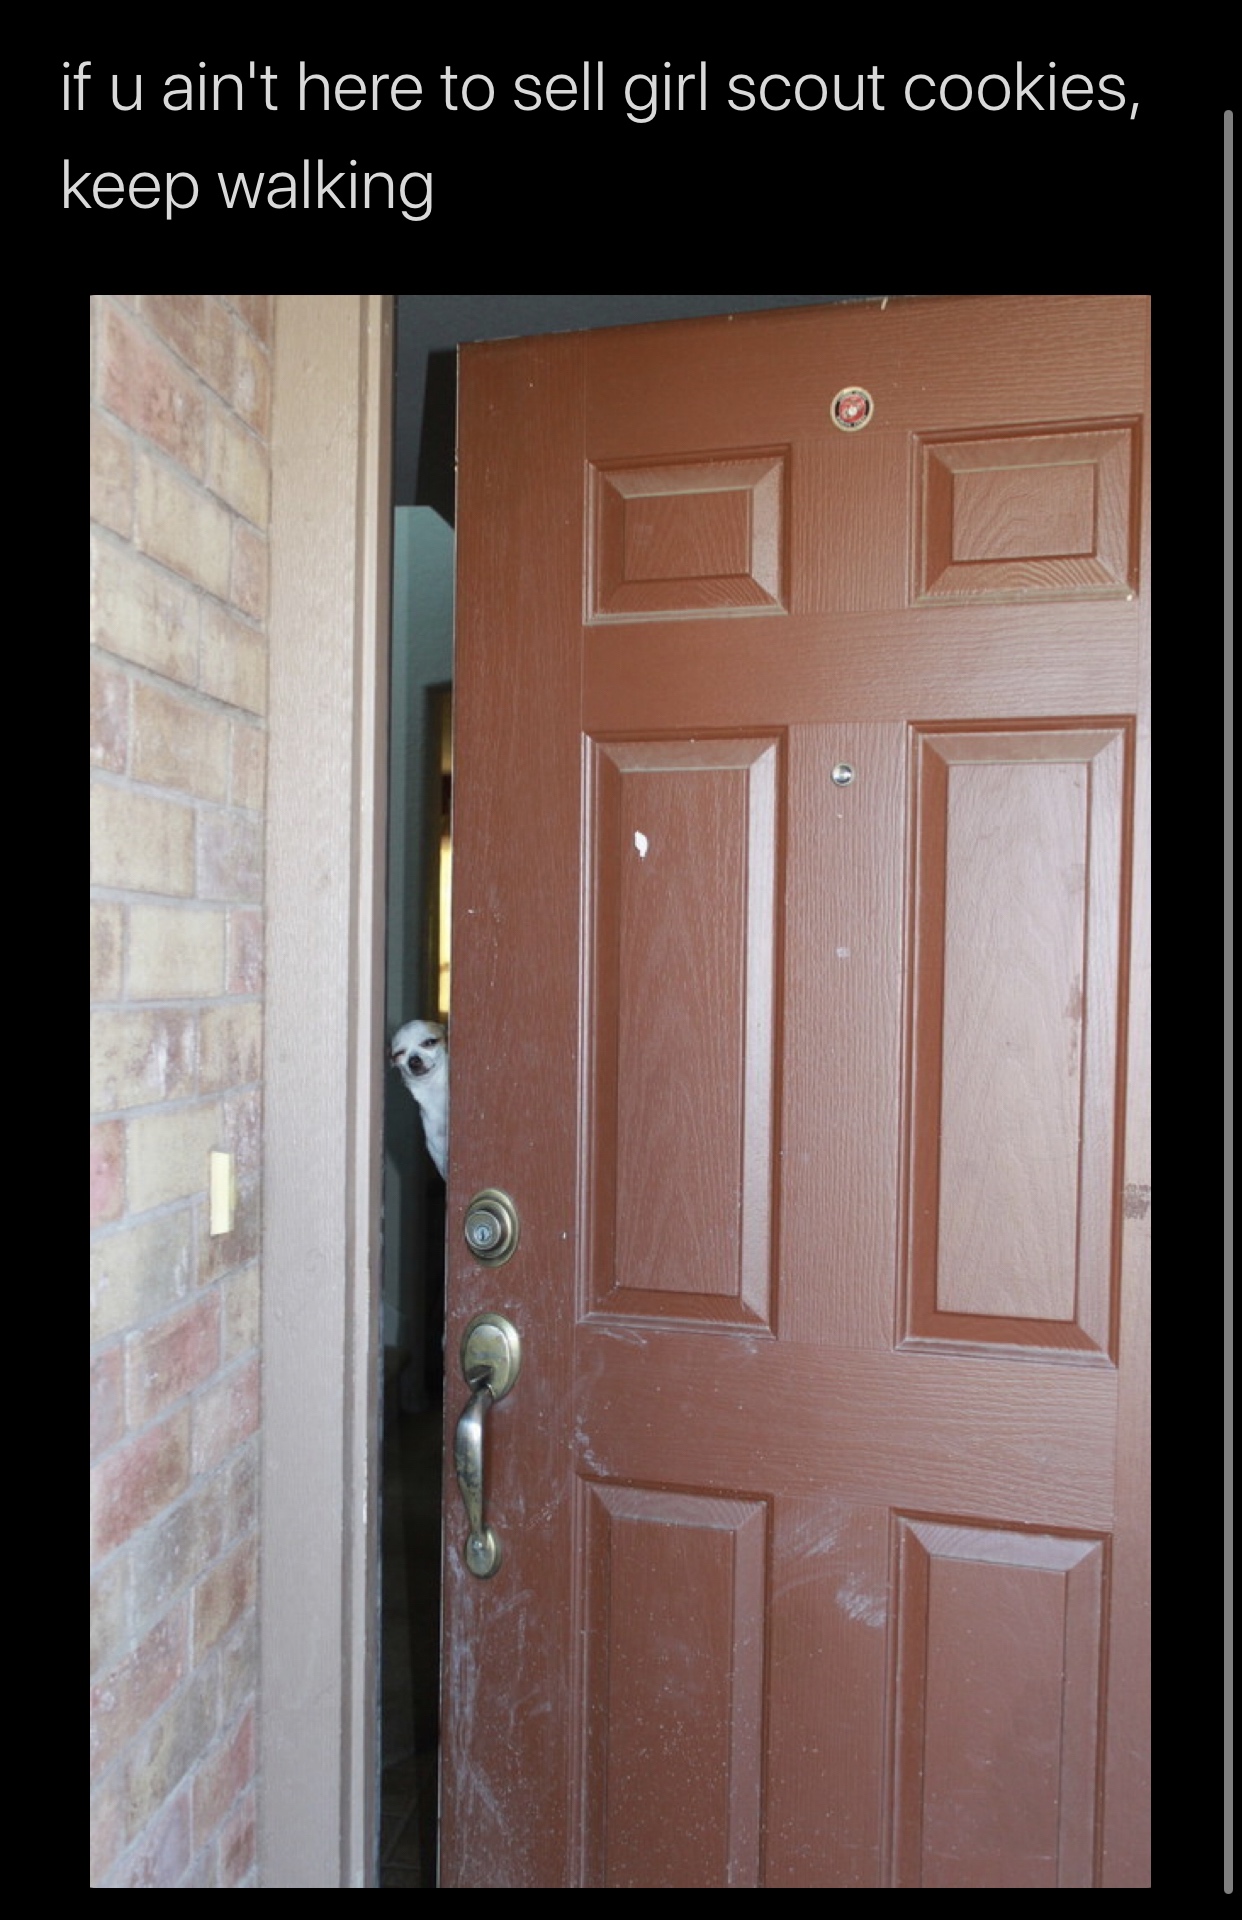 dog answering door meme - if u ain't here to sell girl scout cookies, keep walking